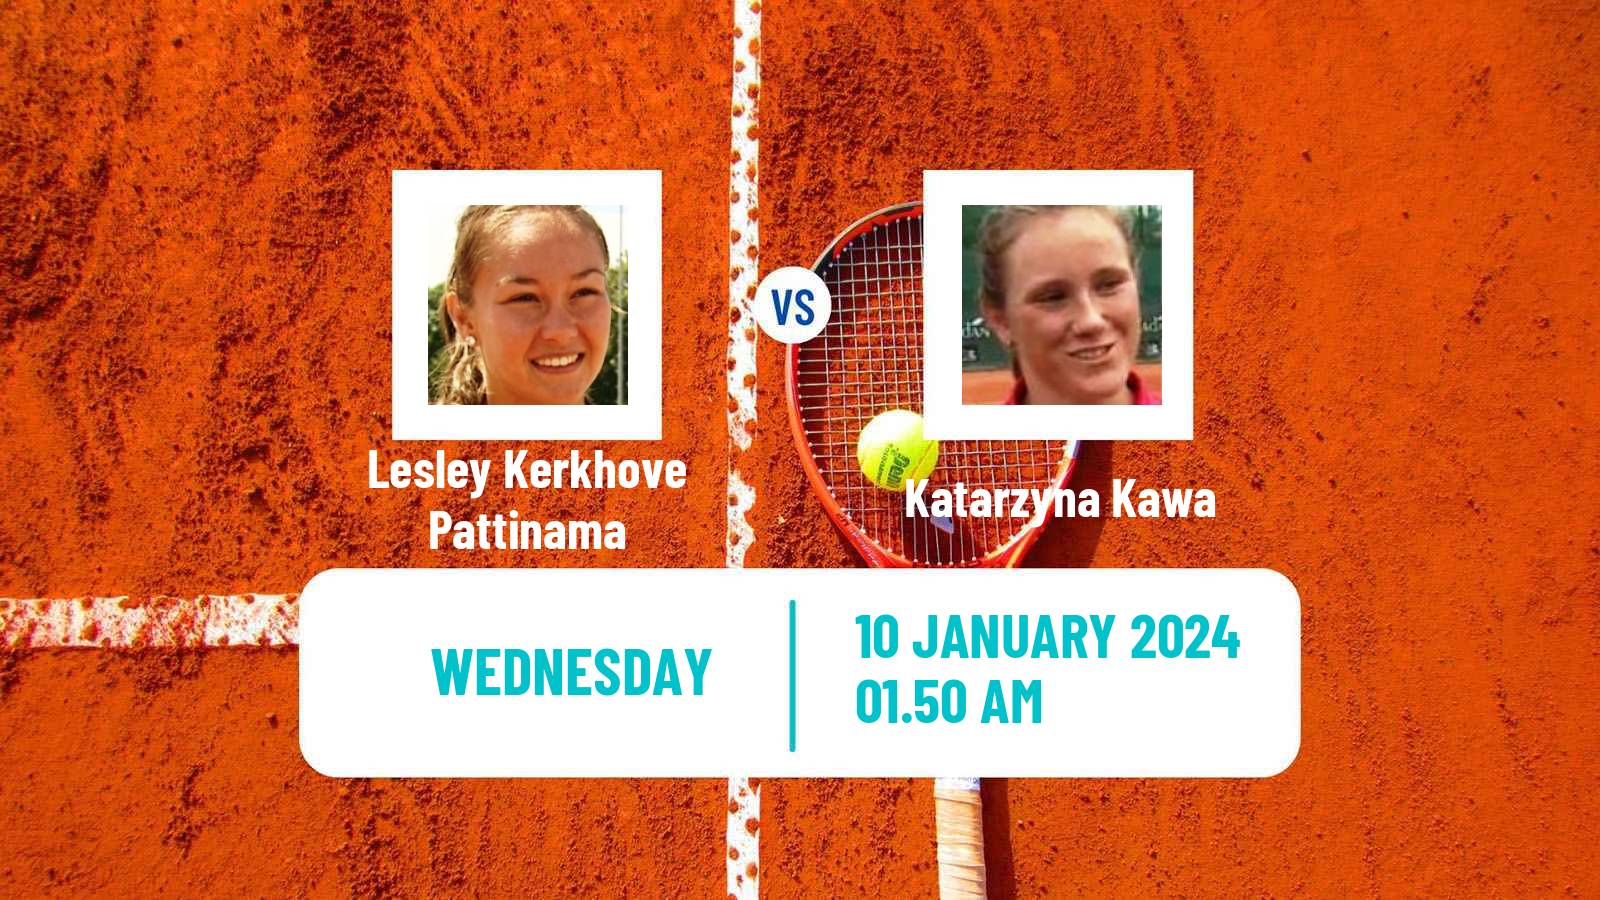 Tennis WTA Australian Open Lesley Kerkhove Pattinama - Katarzyna Kawa